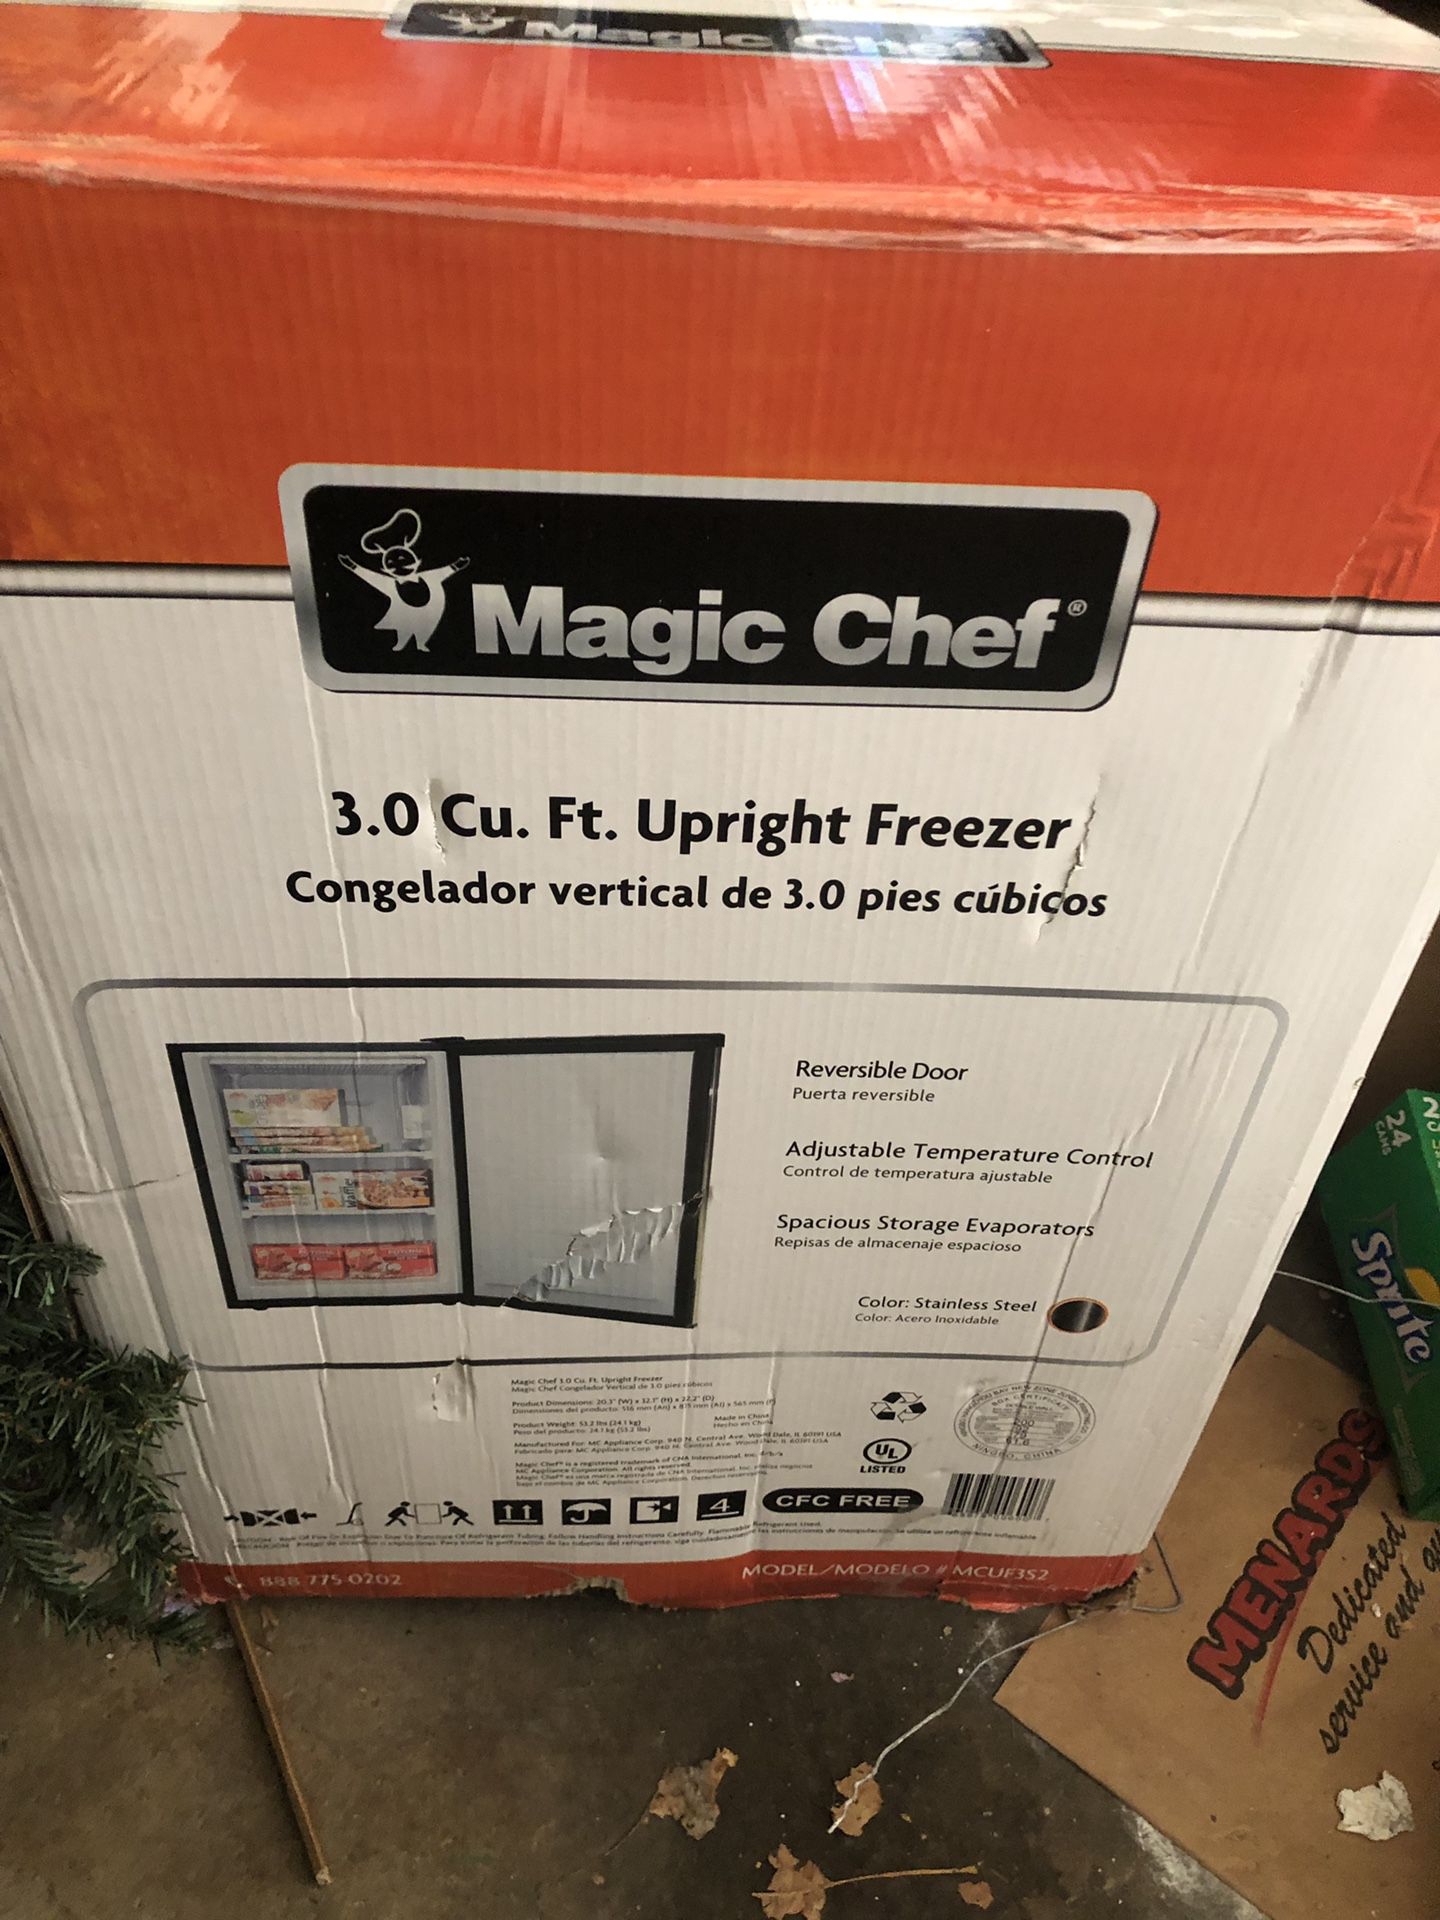 Magic chef 3.0 cu. ft upright freezer